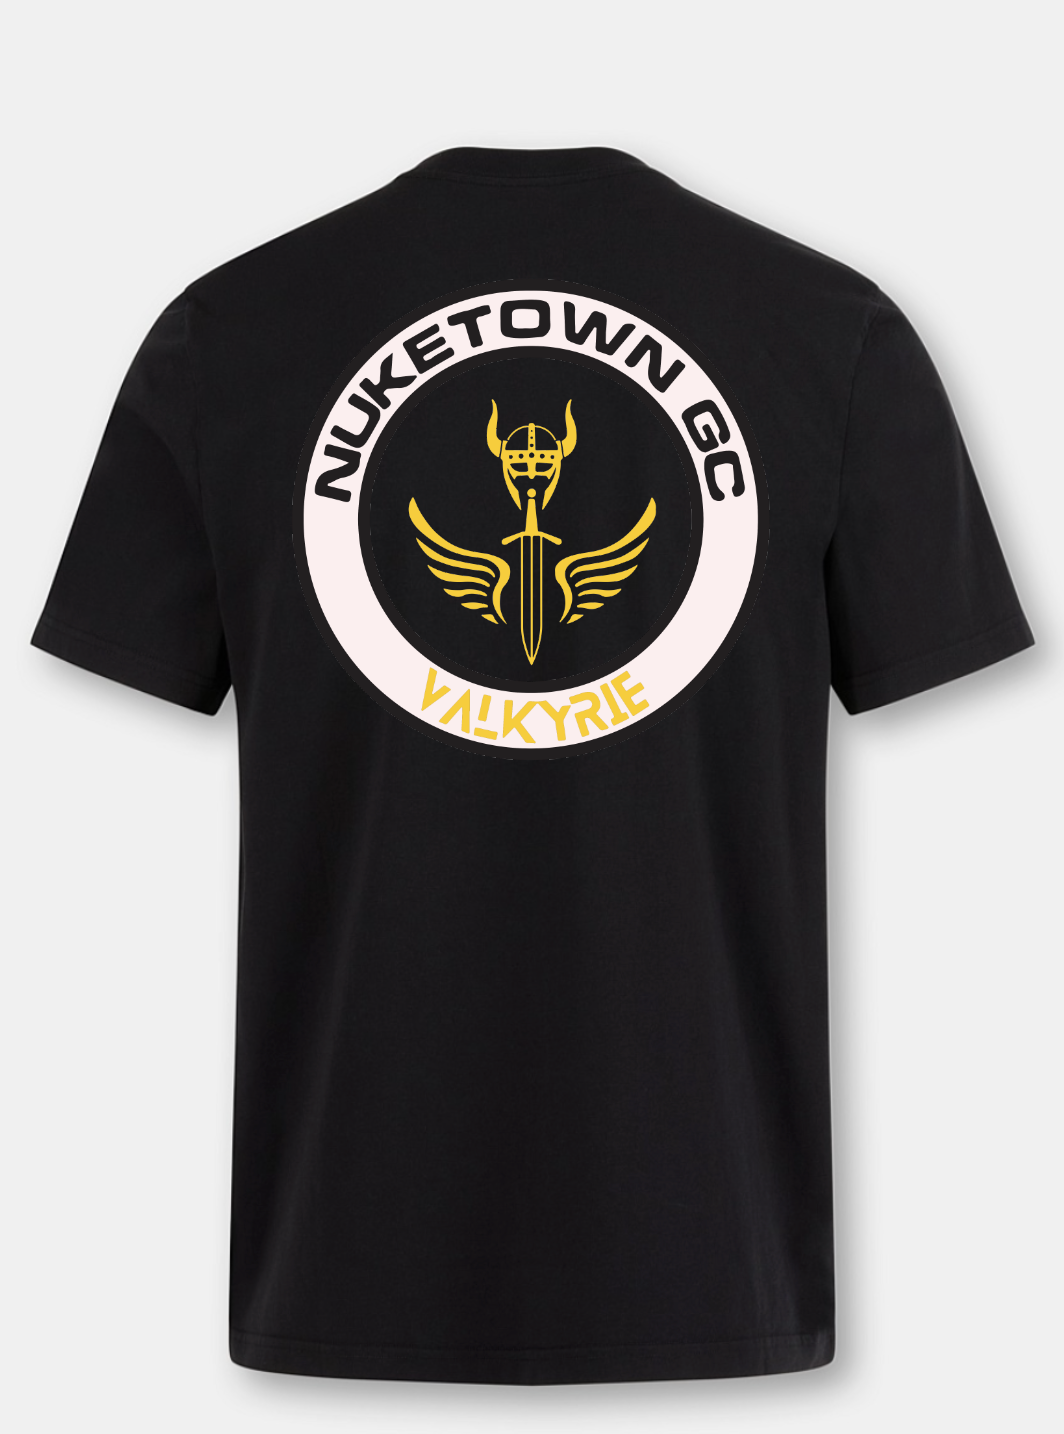 Nuketown Valkyrie Milsoft Gel Ball  T Shirt by Calibre Concept Designs